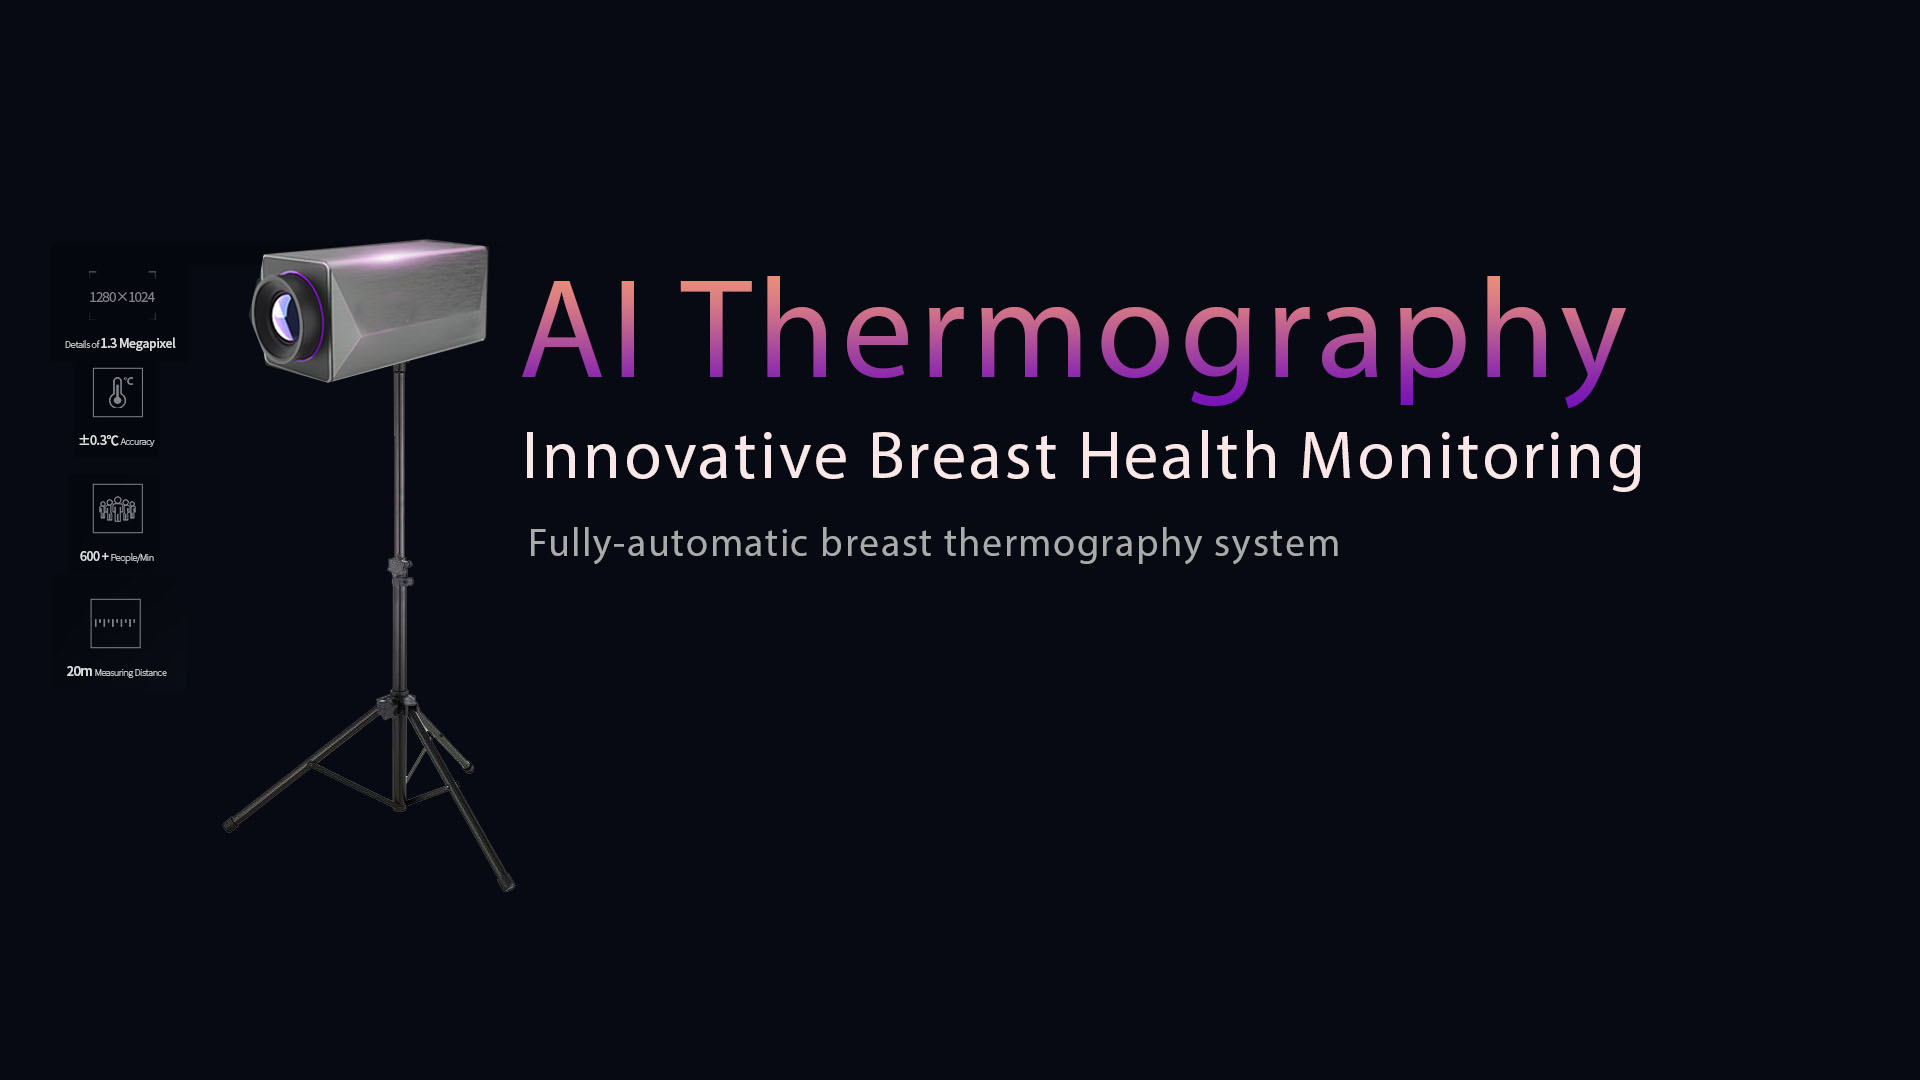 aithermography